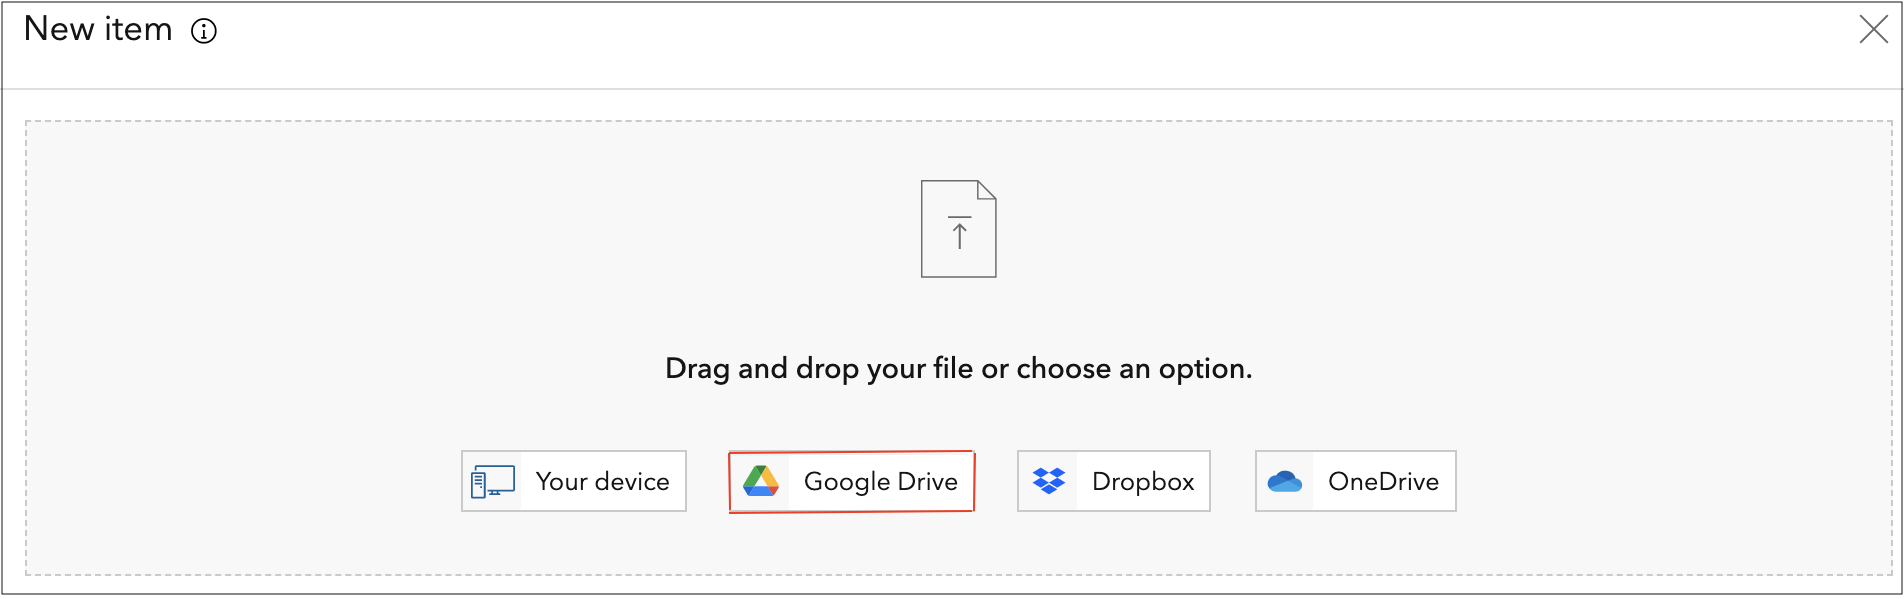 The New item menu displaying the Google Drive option.